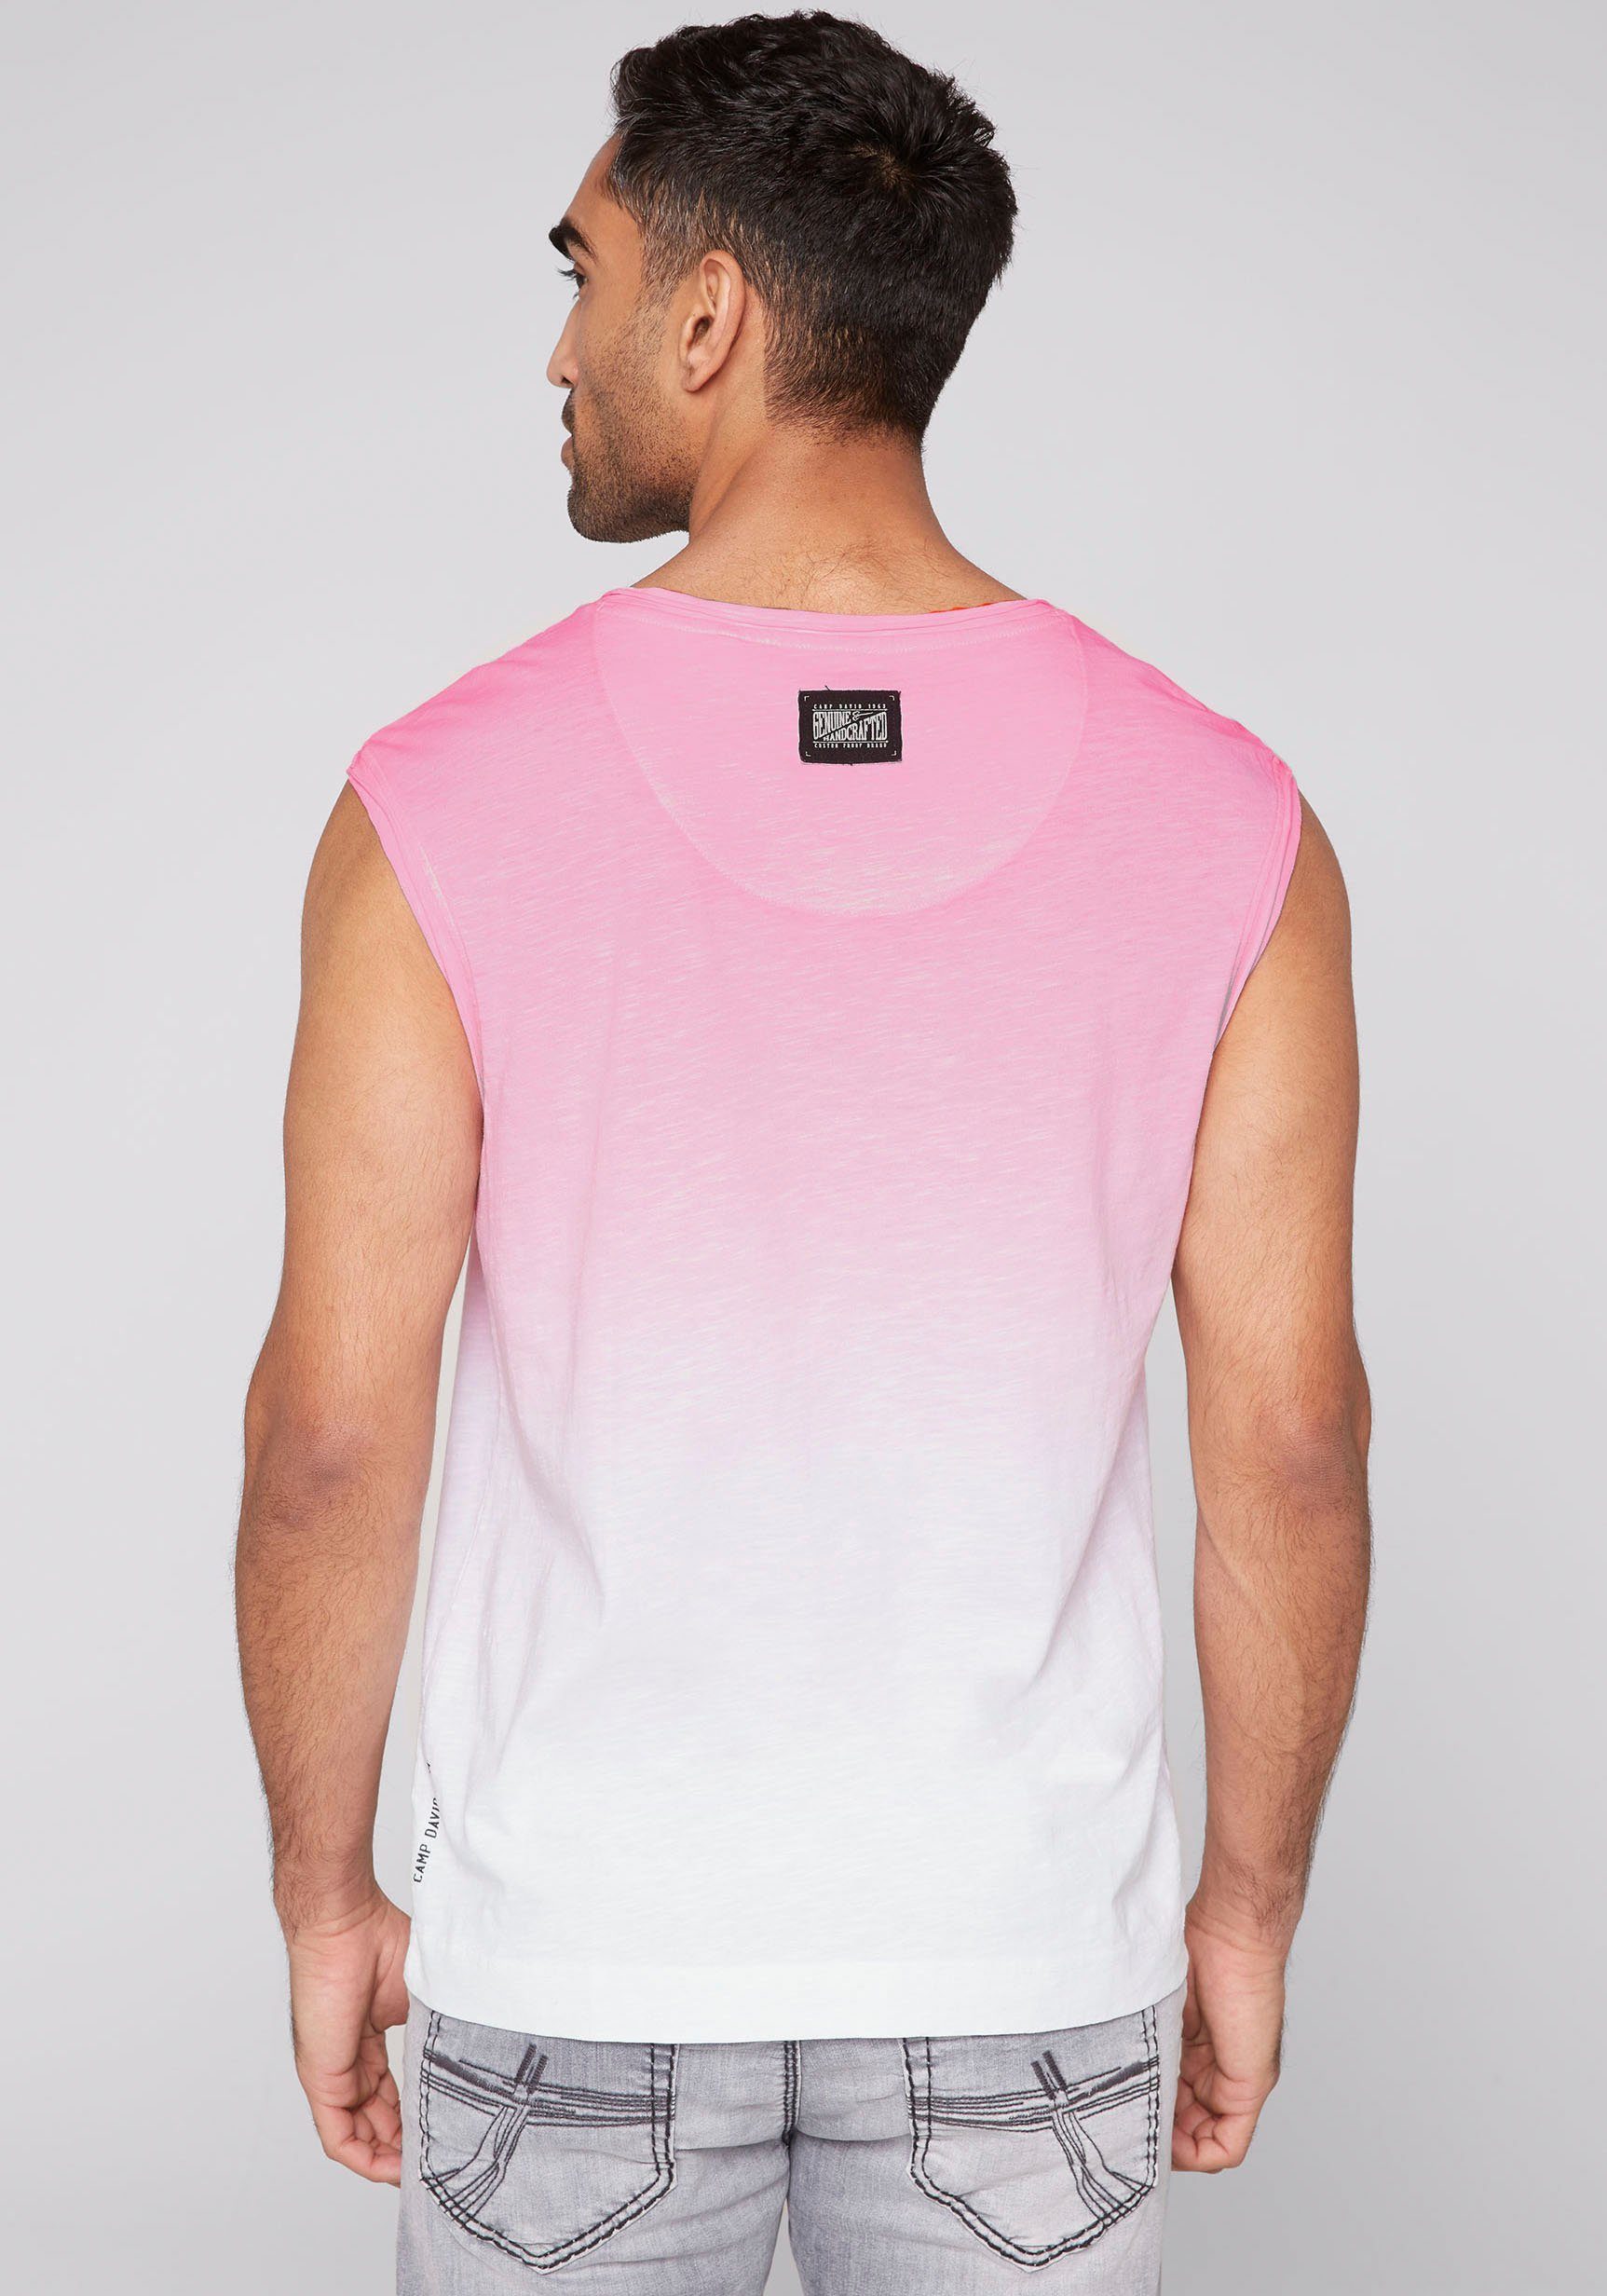 CAMP pink V-Shirt DAVID neon opticwhite /